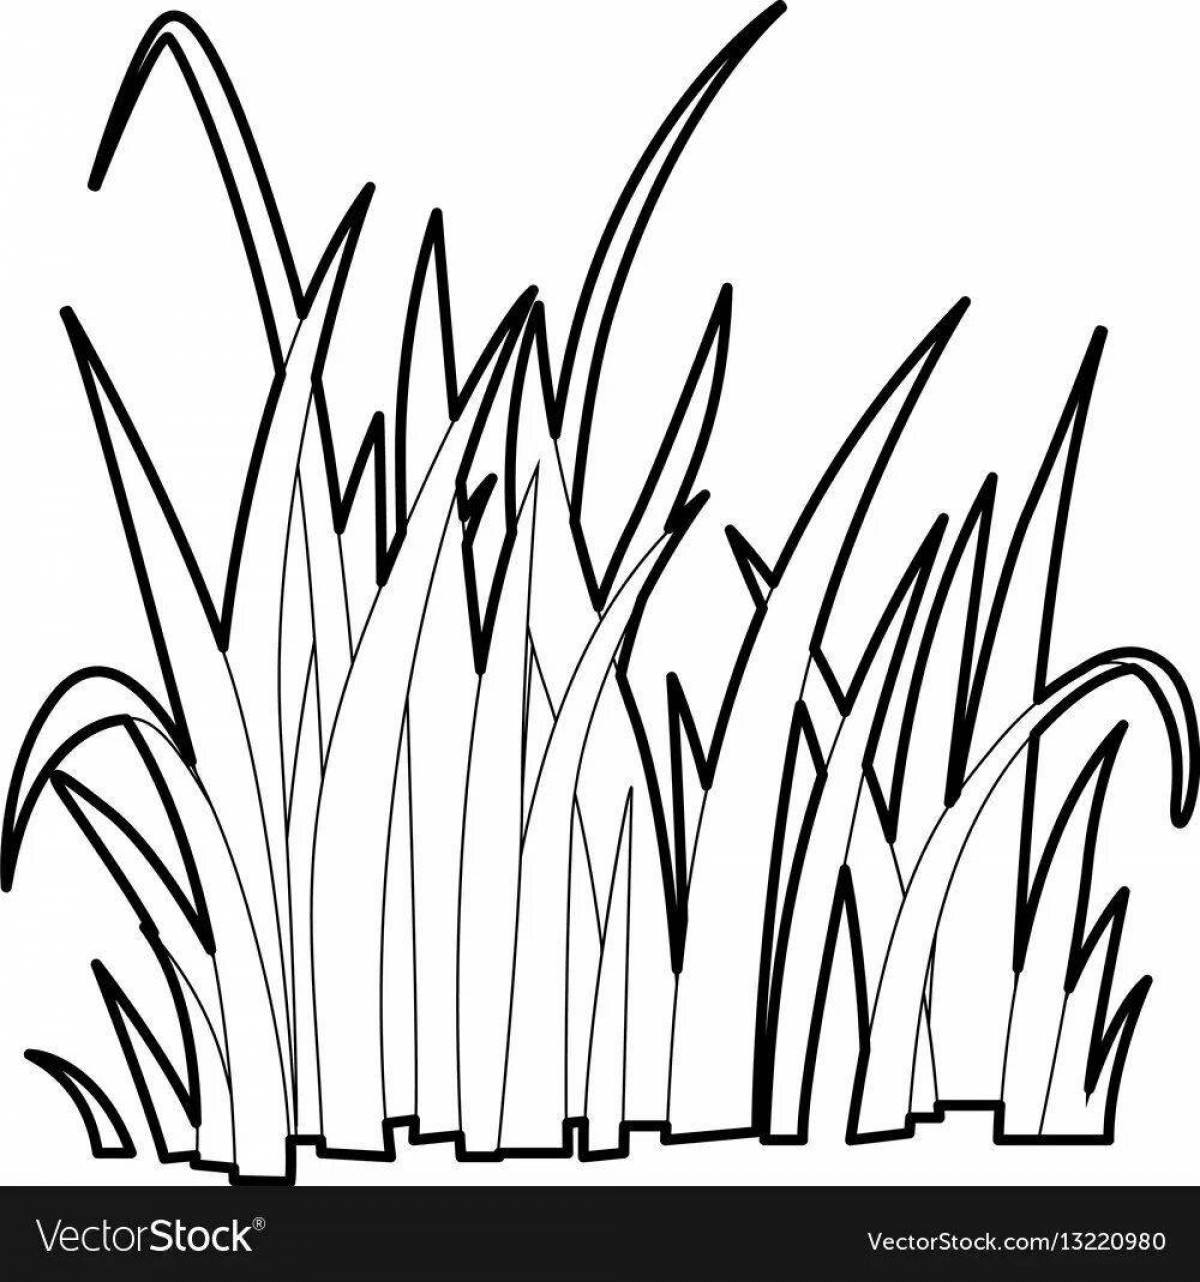 Joyful reeds coloring book for kids